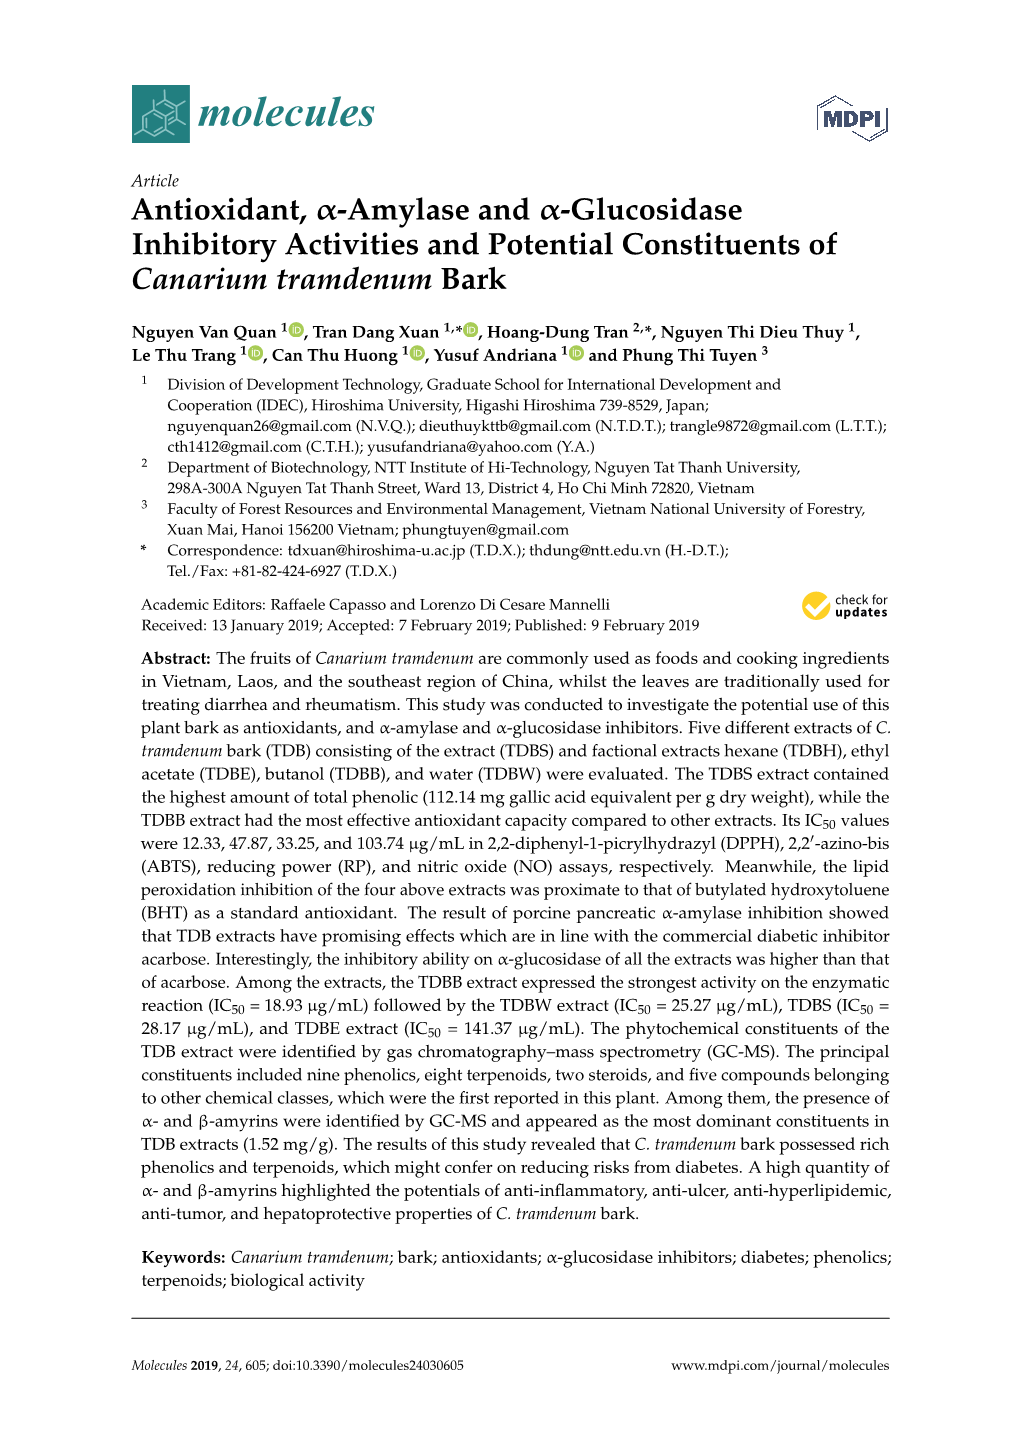 Antioxidant, Α-Amylase and Α-Glucosidase Inhibitory Activities and Potential Constituents of Canarium Tramdenum Bark